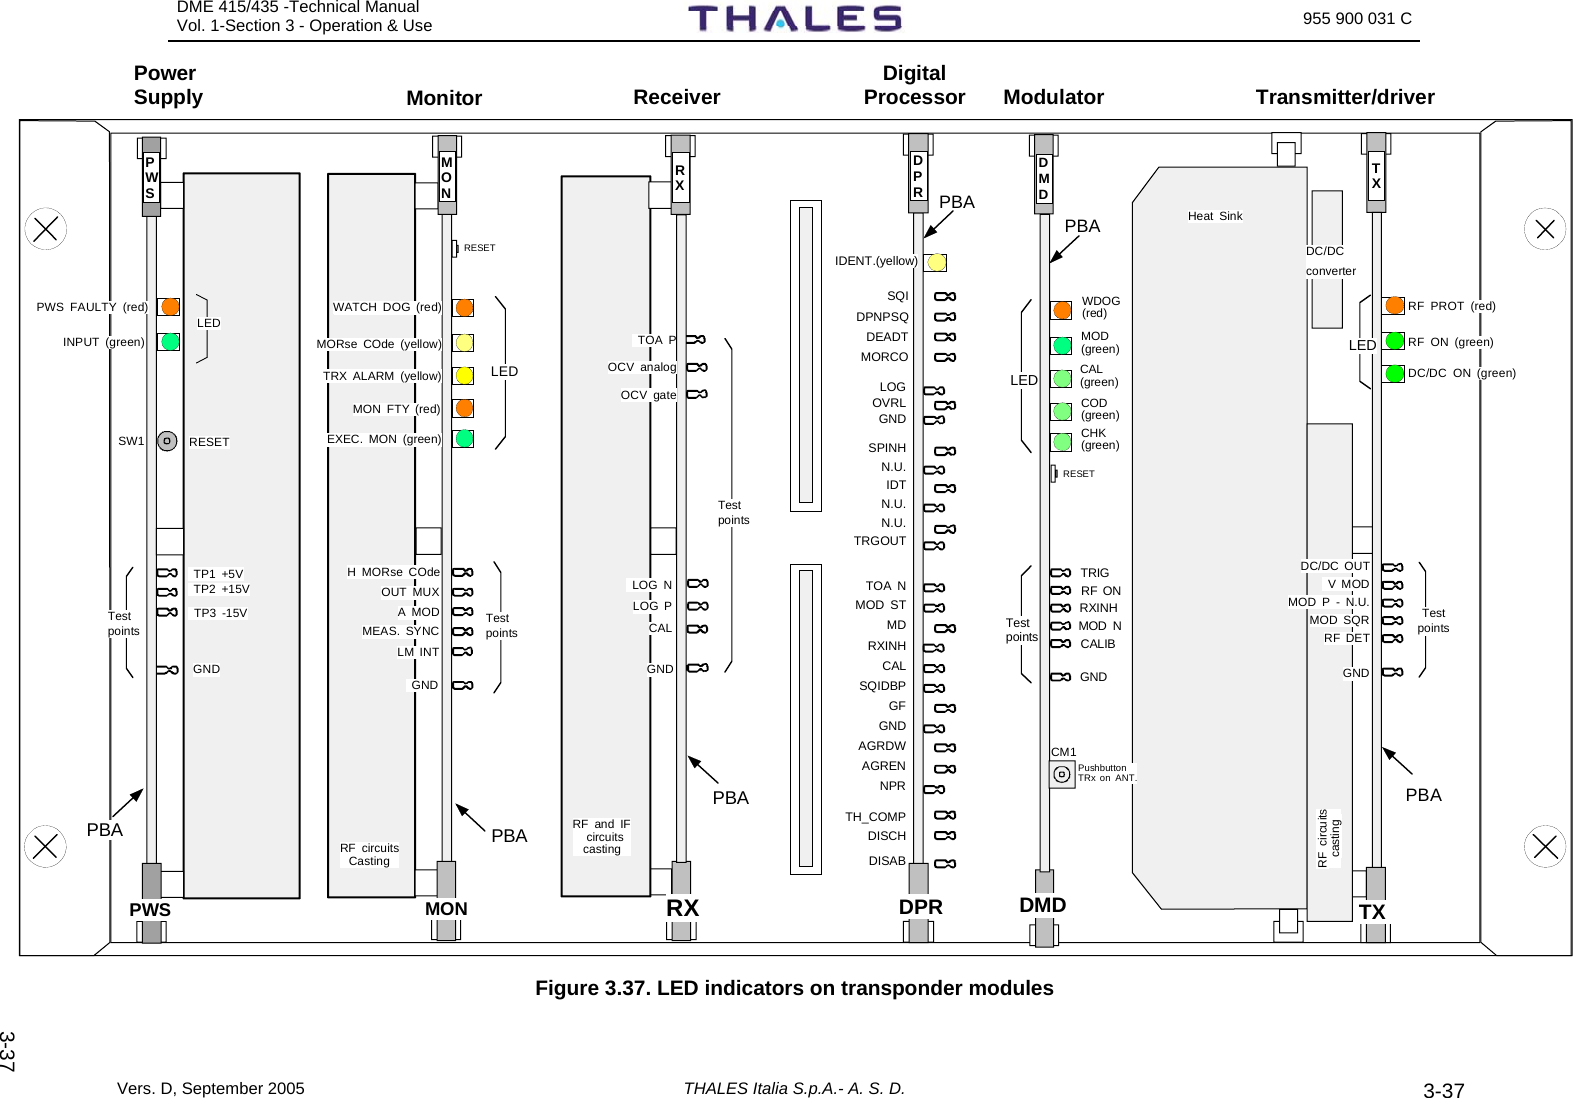 DME 415/435 -Technical Manual  Vol. 1-Section 3 - Operation &amp; Use  955 900 031 C Vers. D, September 2005  THALES Italia S.p.A.- A. S. D. 3-37   3-37DigitalProcessorIDENT.(yellow)TOA NMOD STMD CAL SQIDBPGND DPNPSQ DEADT MORCO SQIDPR  LOG GNDSPINH N.U. IDTOVRL N.U. N.U.TRGOUT RXINH GFAGRDWAGREN NPRTH_COMP DISCHDISABDPRWDOG(red)MOD(green)CAL(green)COD(green)CHK(green)DMD PBALEDTest pointsDMD Modulator PBATX GNDRF PROT (red)RF ON (green)DC/DC ON (green)DC/DC OUT V MODMOD P - N.U.MOD SQRRF DETTXDC/DCconverterHeat SinkRF circuitscasting PBATest pointsLEDTransmitter/driver GNDCALIBMOD NRXINHRF ONTRIGReceiver  TOA P LOG NLOG PCALGNDPBARXOCV analogOCV gateRXRF and IF circuitscasting Test pointsMonitorH MORse COdeA MODMEAS. SYNCOUT MUX GNDMON PBAMONLEDTest pointsRF circuitsCasting Power SupplyINPUT (green)PWS FAULTY (red)RESETGND TP2 +15V TP1 +5V TP3 -15VPWS PBAPWSTest pointsLEDSW1WATCH DOG (red)MORse COde (yellow)TRX ALARM (yellow)MON FTY (red)EXEC. MON (green)CM1PushbuttonTRx on ANT.RESETRESETLM INT Figure 3.37. LED indicators on transponder modules  